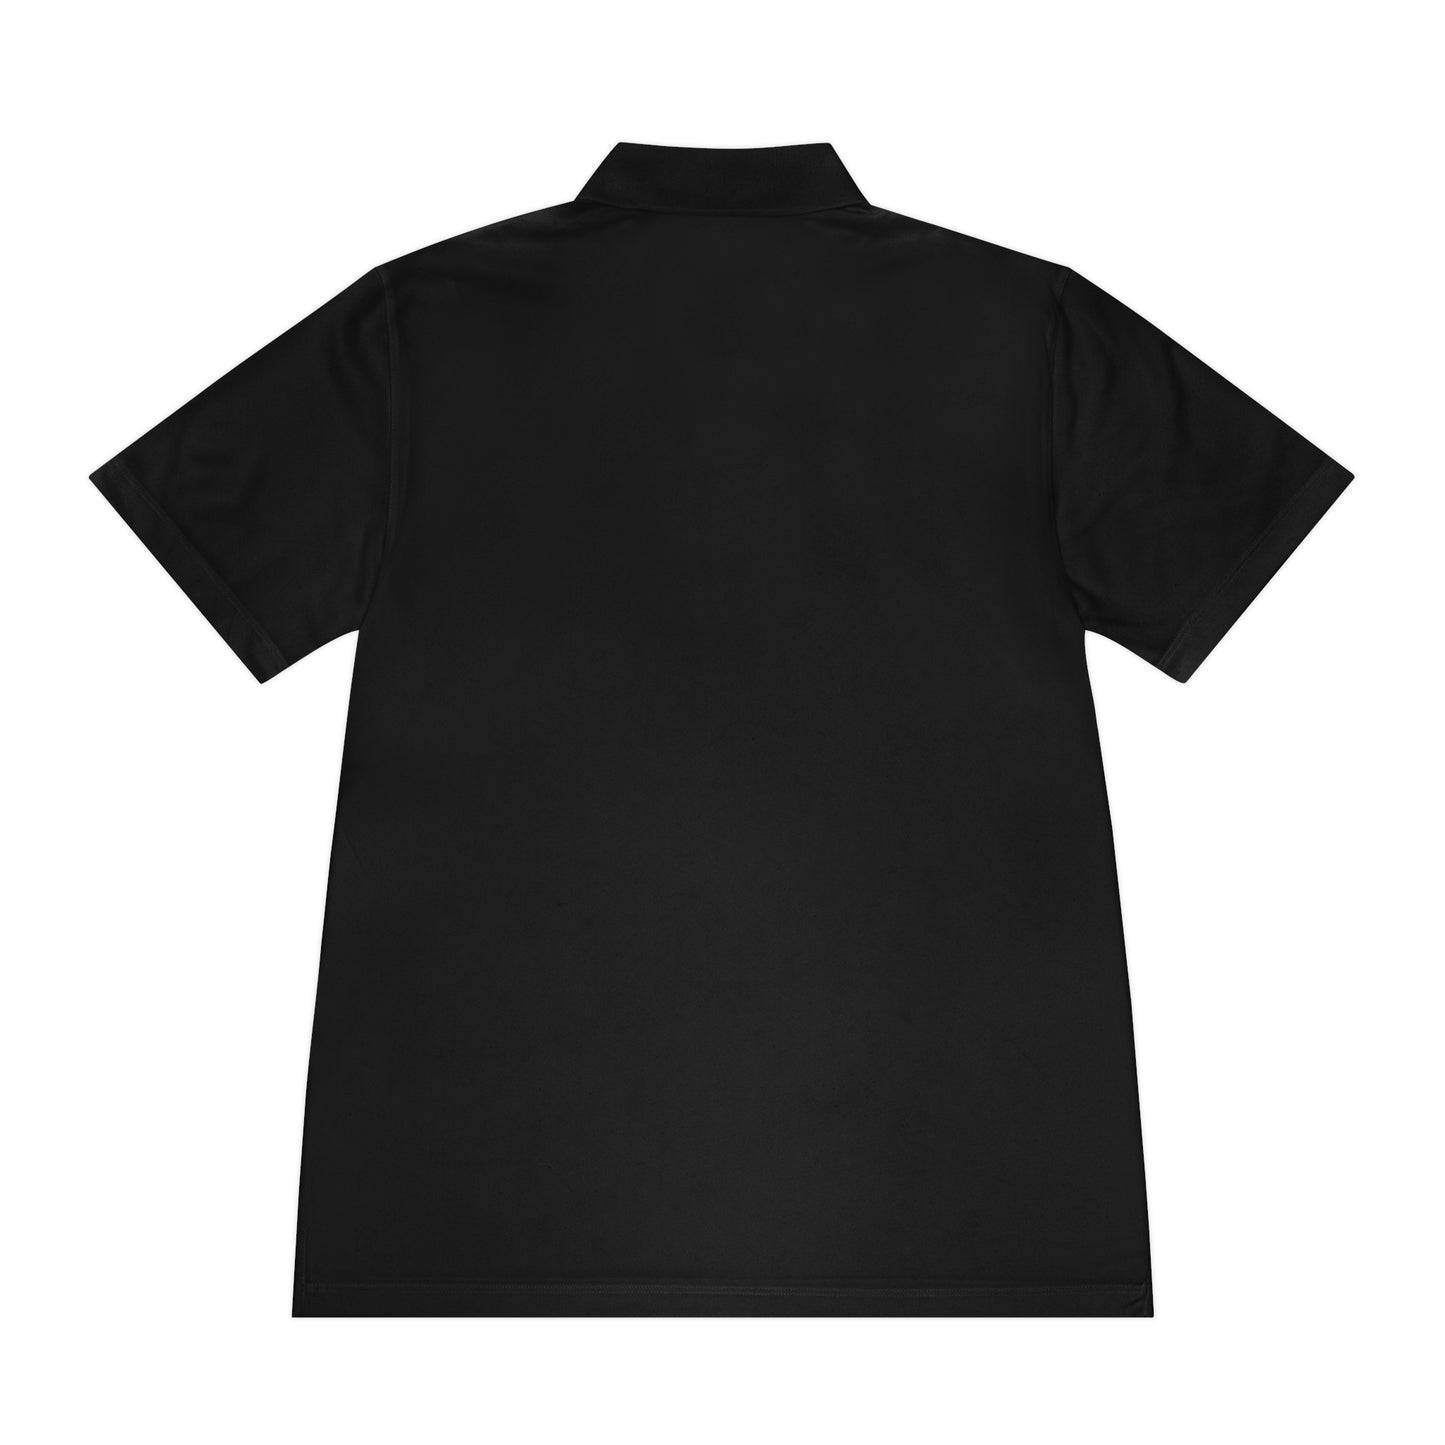 The FA Community Shield Men's Sport Polo Shirt